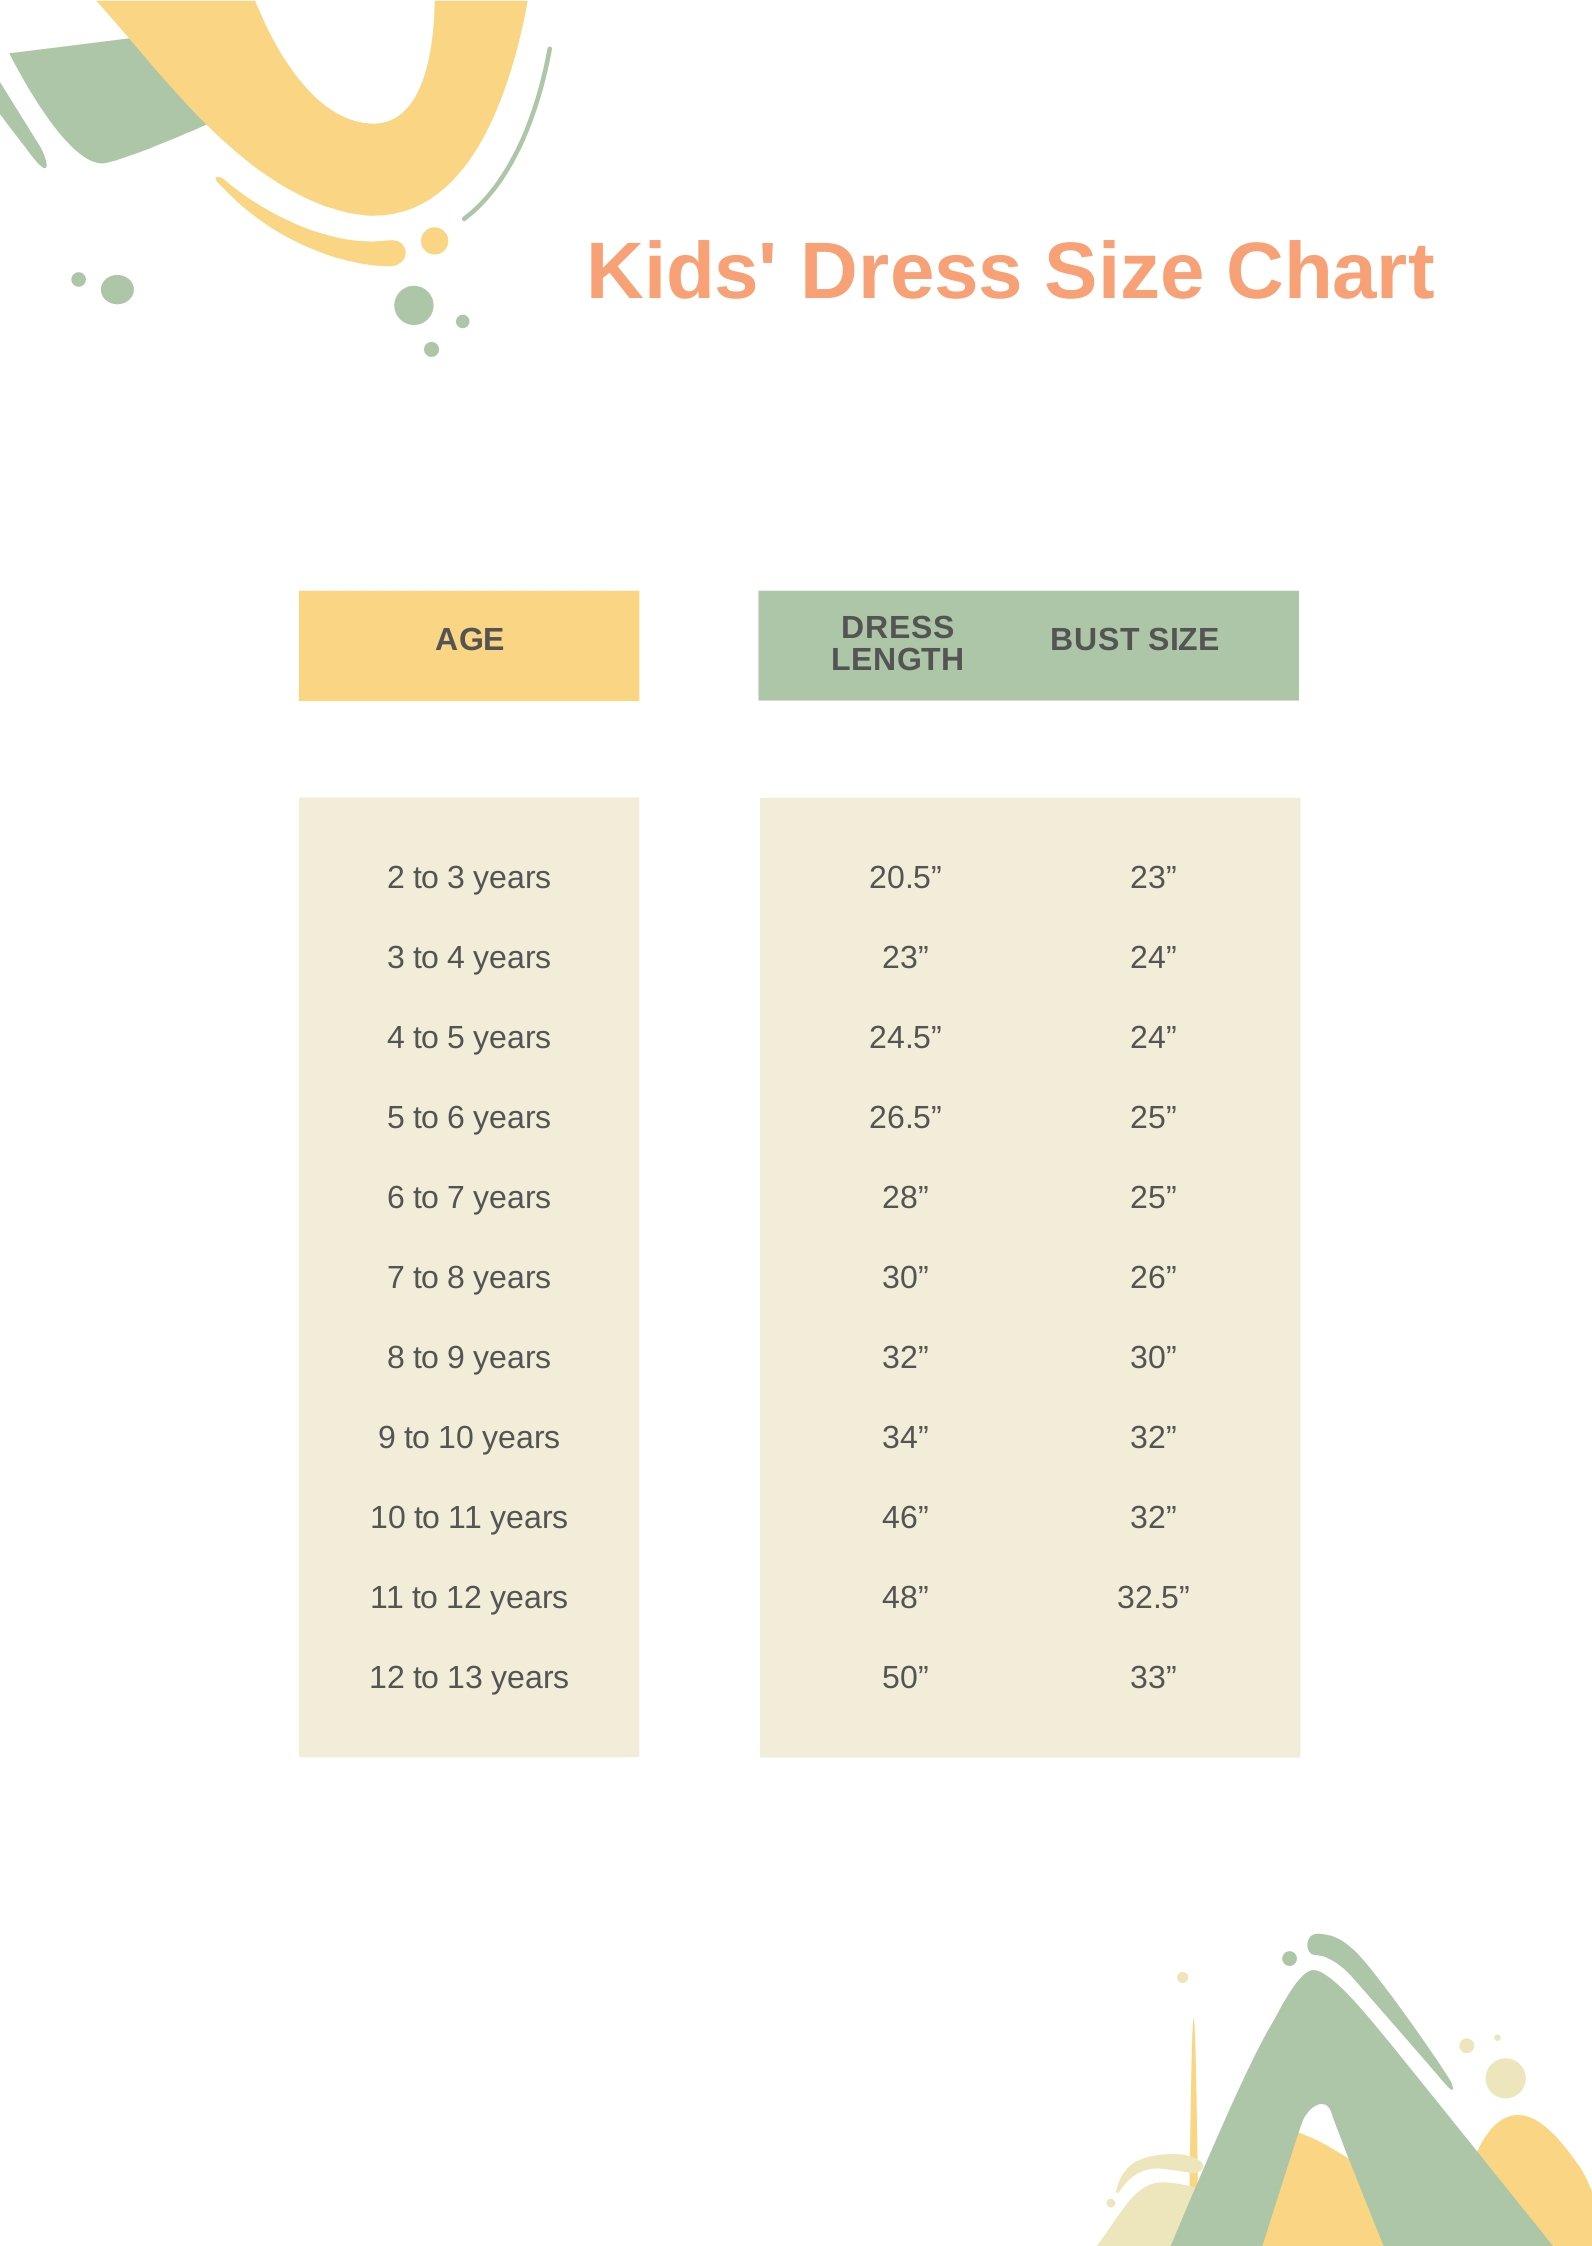 Kids Dress Size Chart in PDF